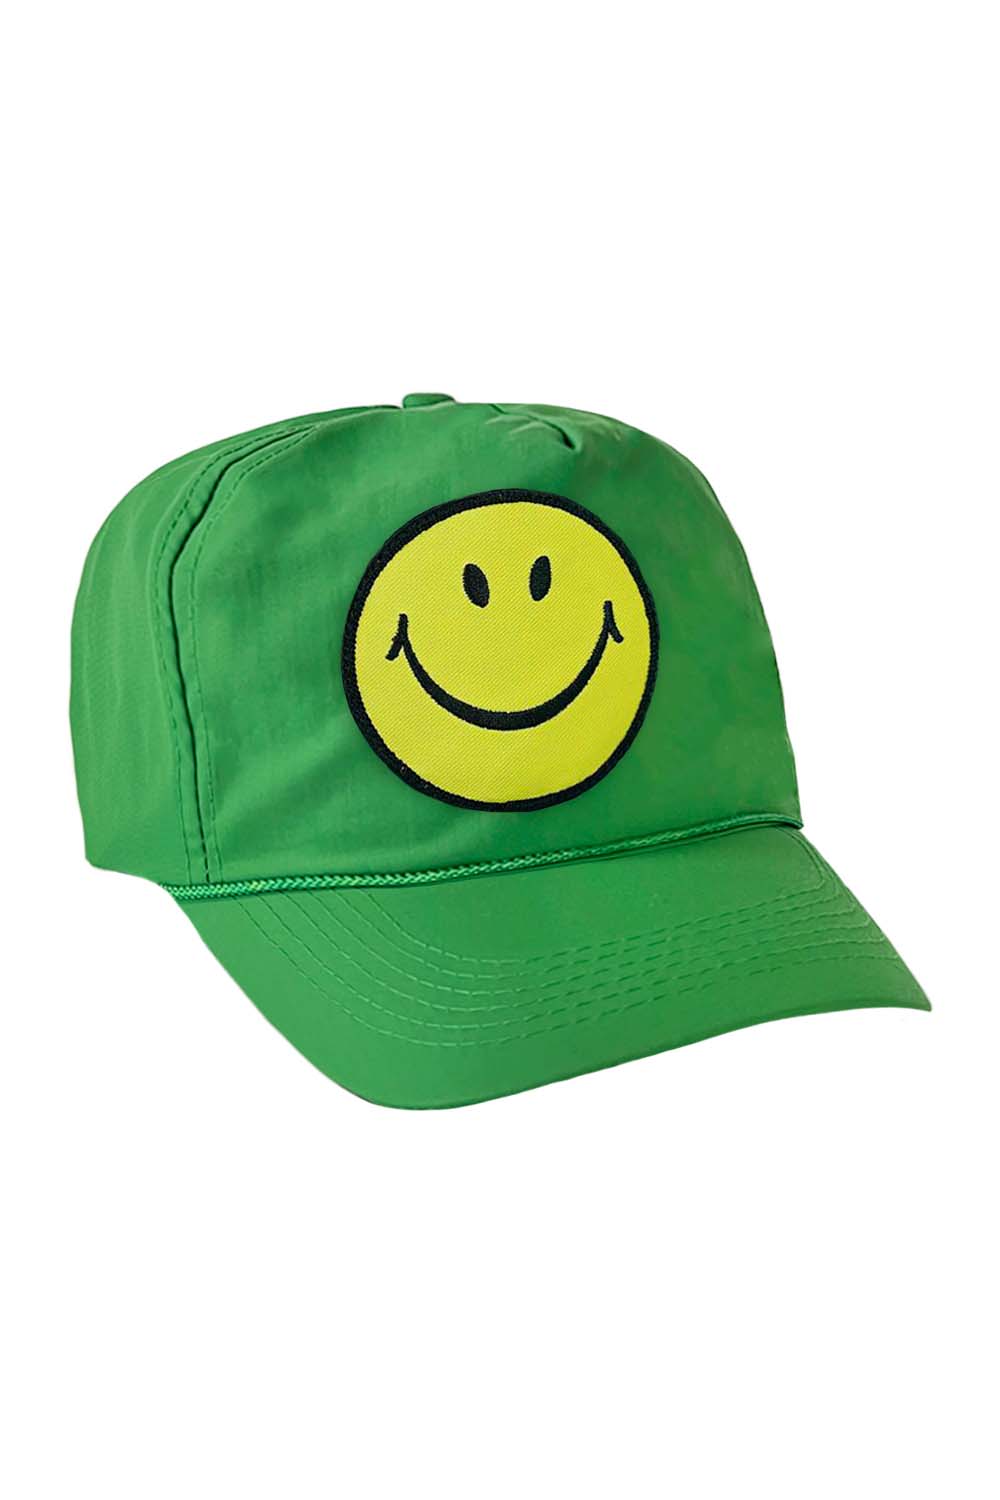 SMILEY - VINTAGE NYLON TRUCKER HAT HATS Aviator Nation KELLY GREEN 